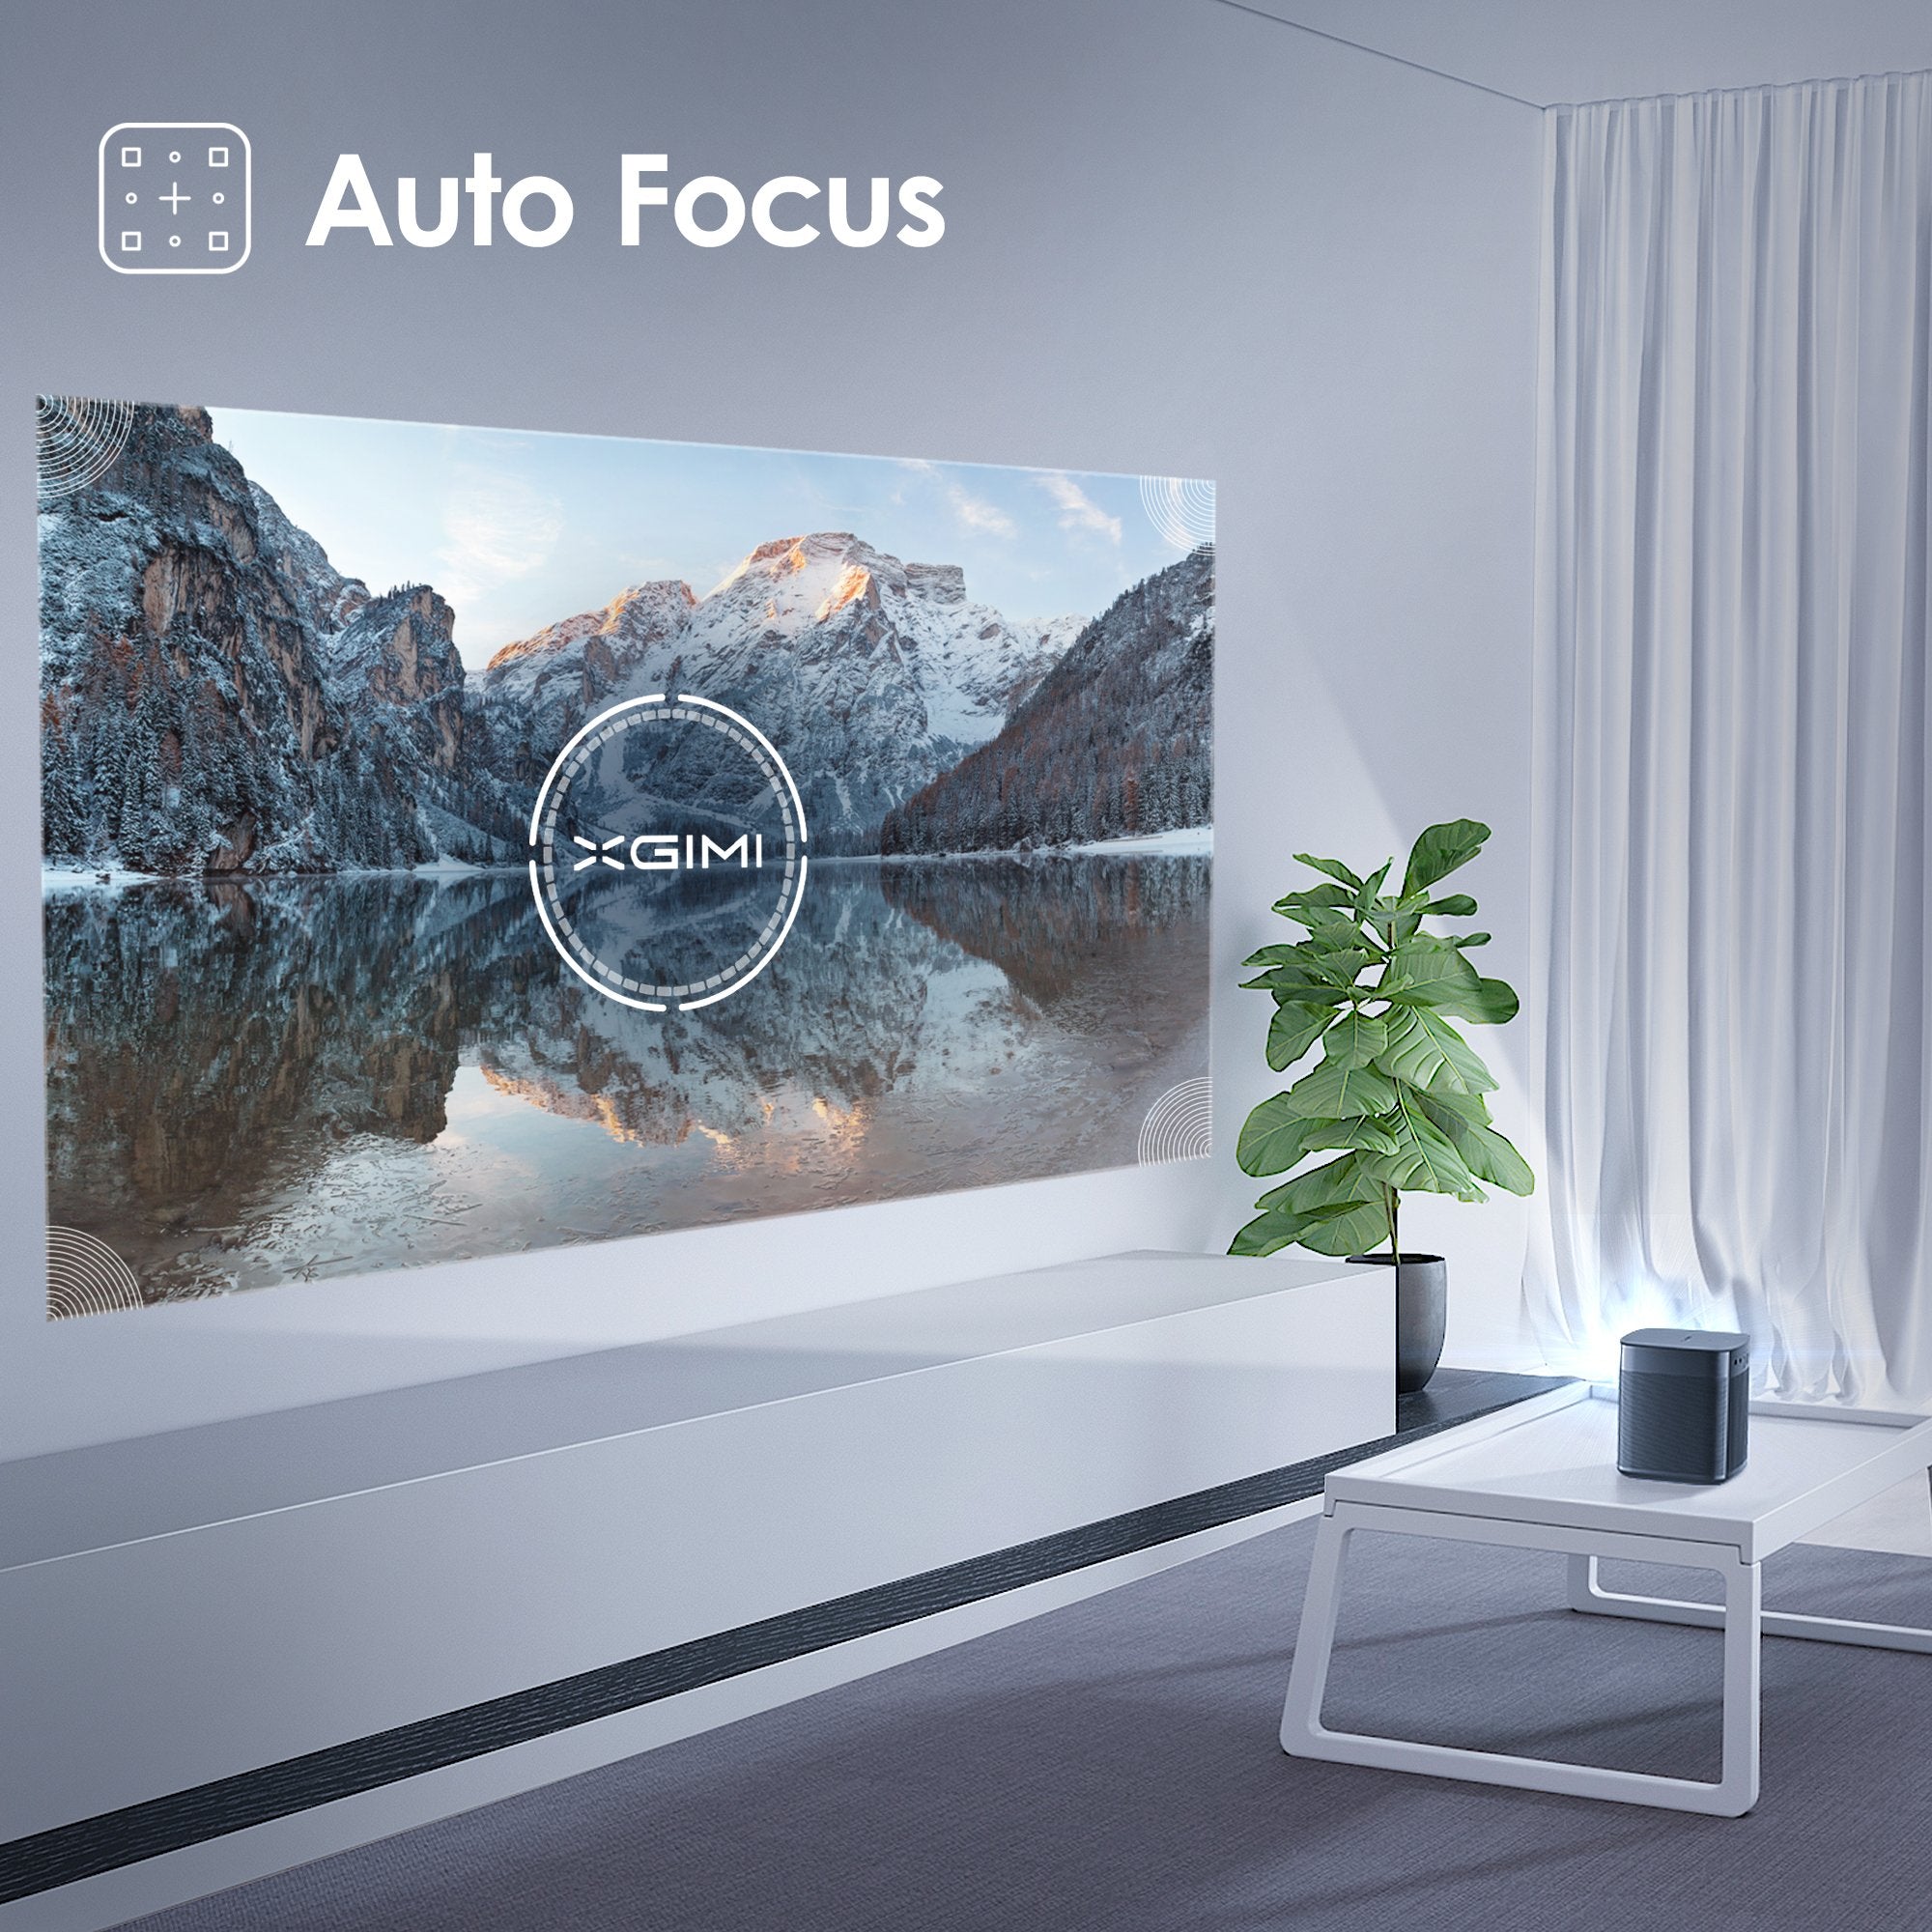 Halo - Smart Portable Projector - Auto Focus